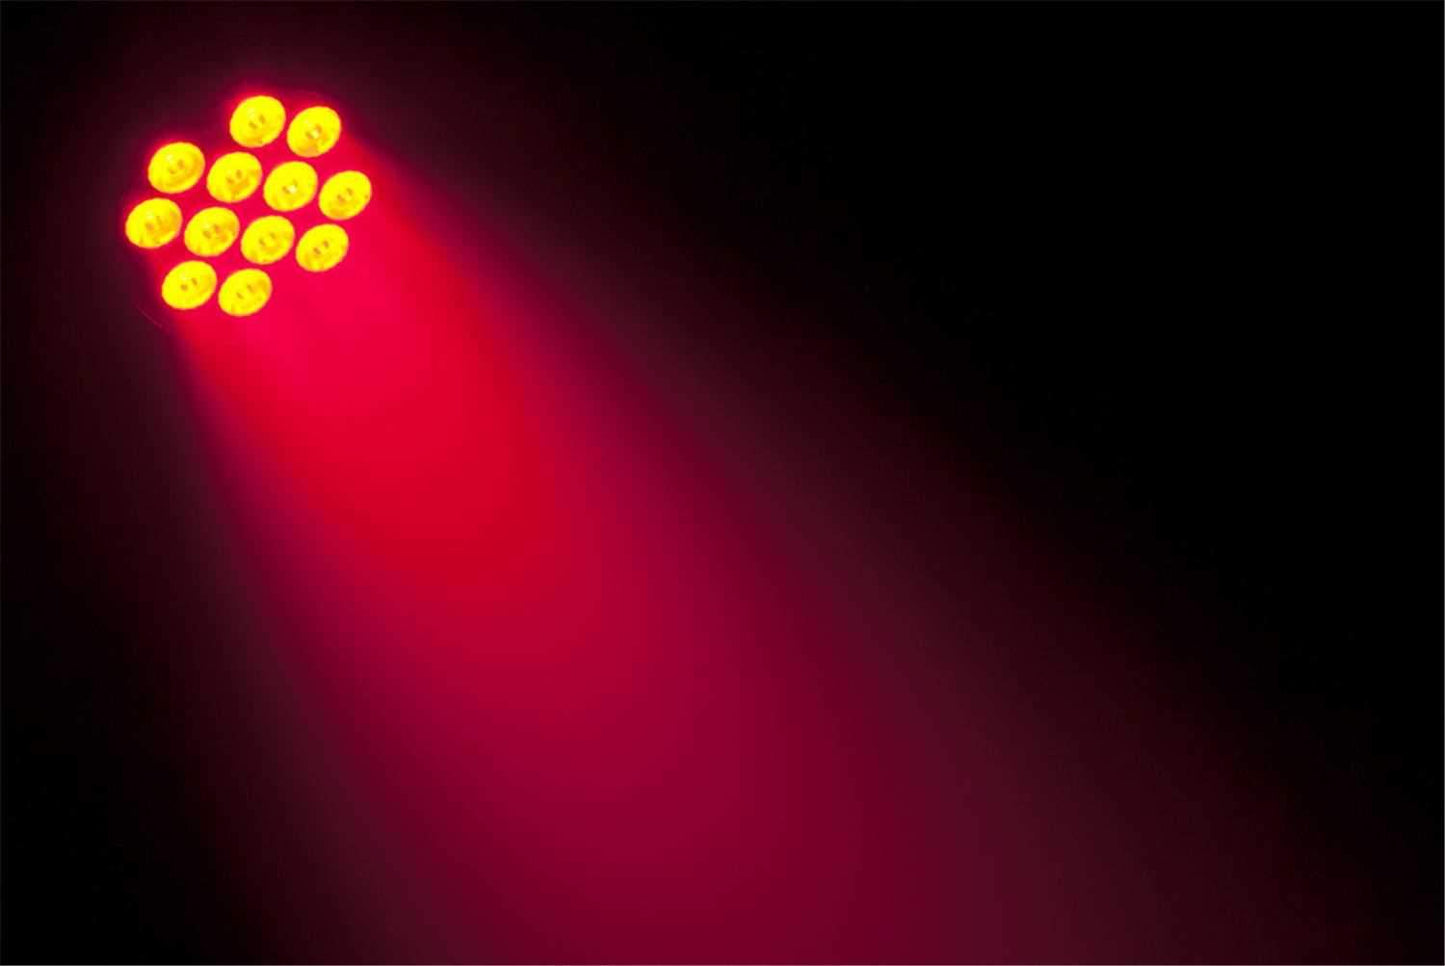 Chauvet SlimPAR Tri 12 IRC RGB DMX LED Wash Light - PSSL ProSound and Stage Lighting